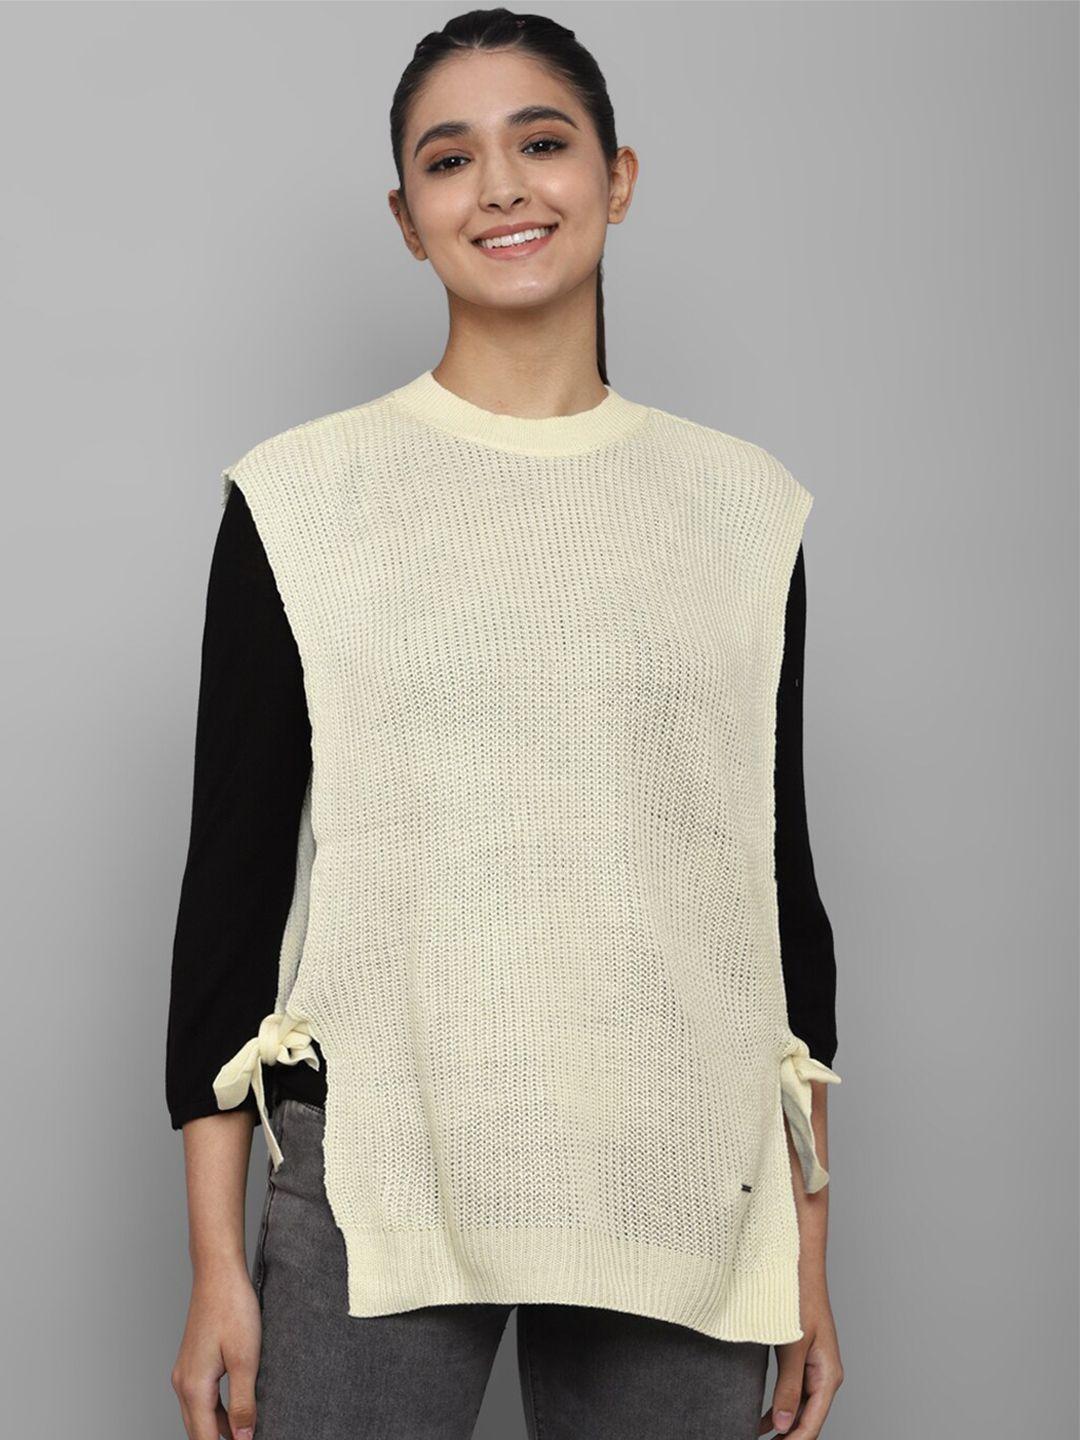 allen solly woman women cream-coloured & black sweater vest